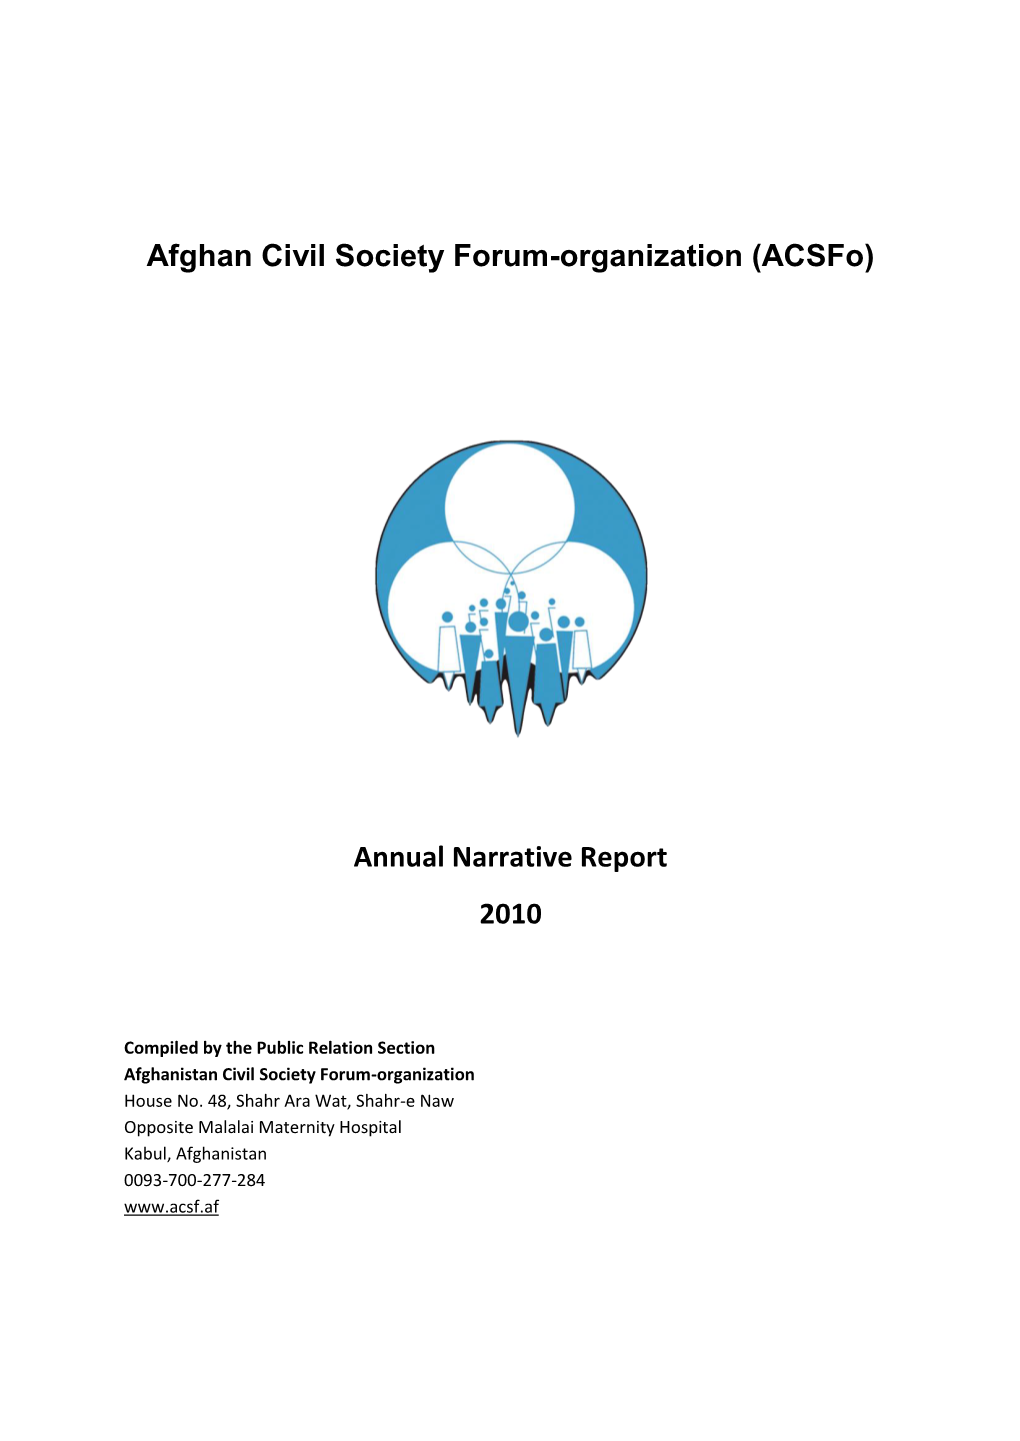 Annual Narrative Report 2010